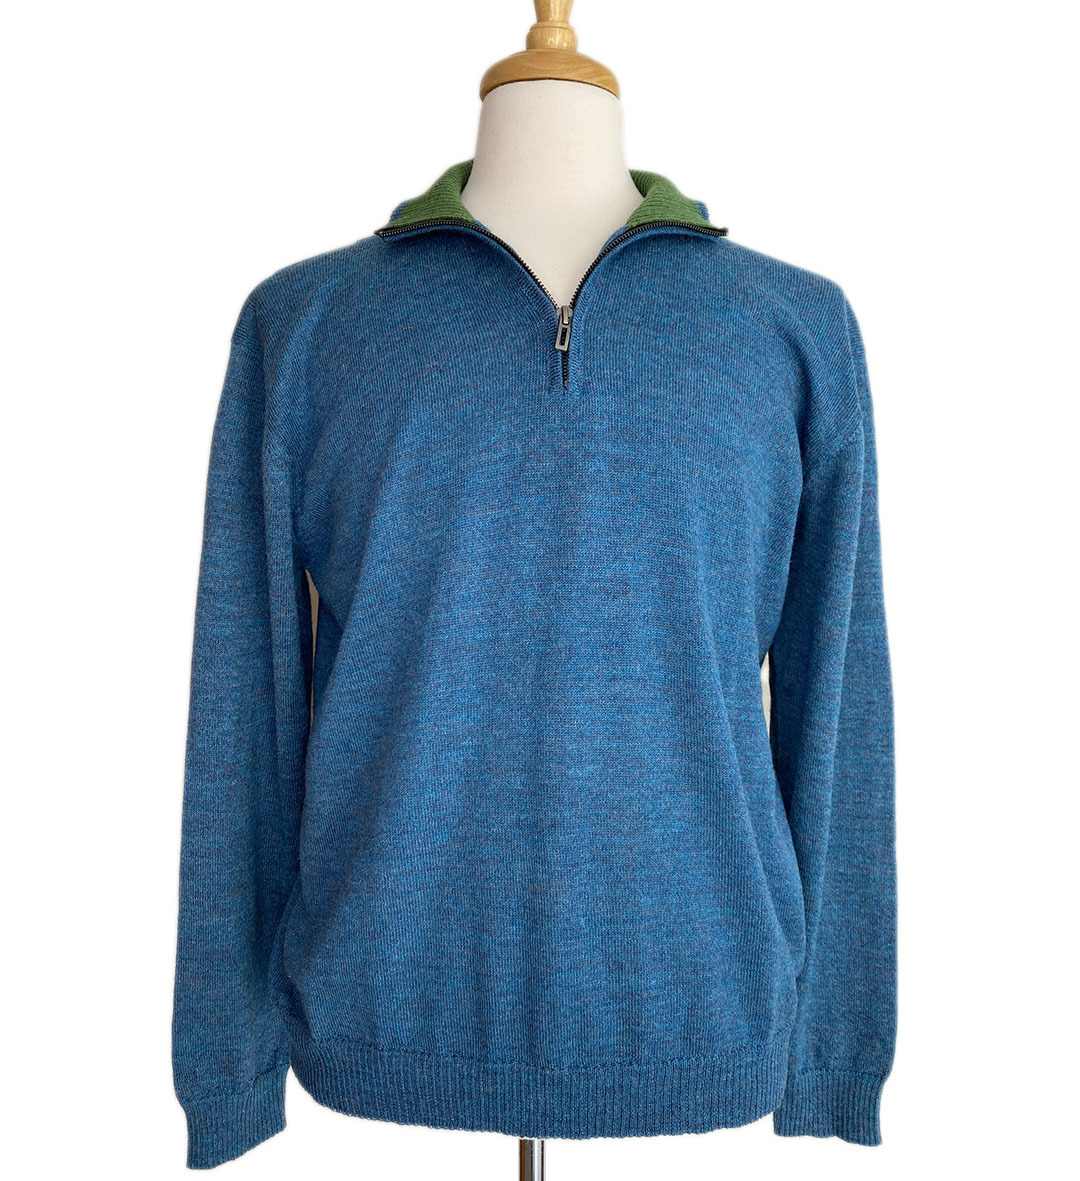 NEW - Brent Half Zip Sweater - Blue/Green - 1